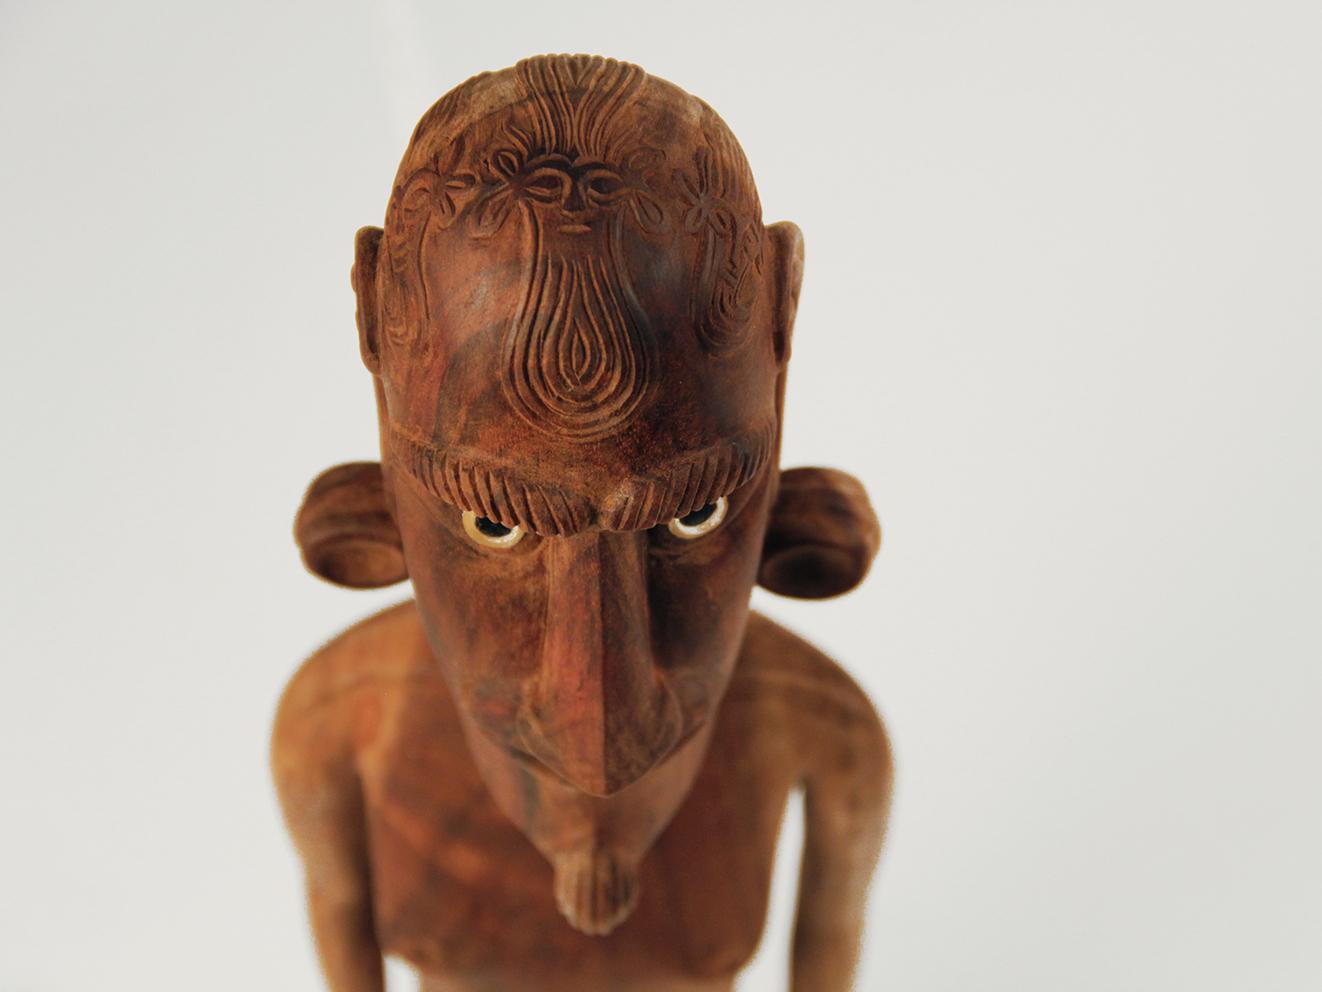 Detalle de grabado en la cabeza de un moái tangata